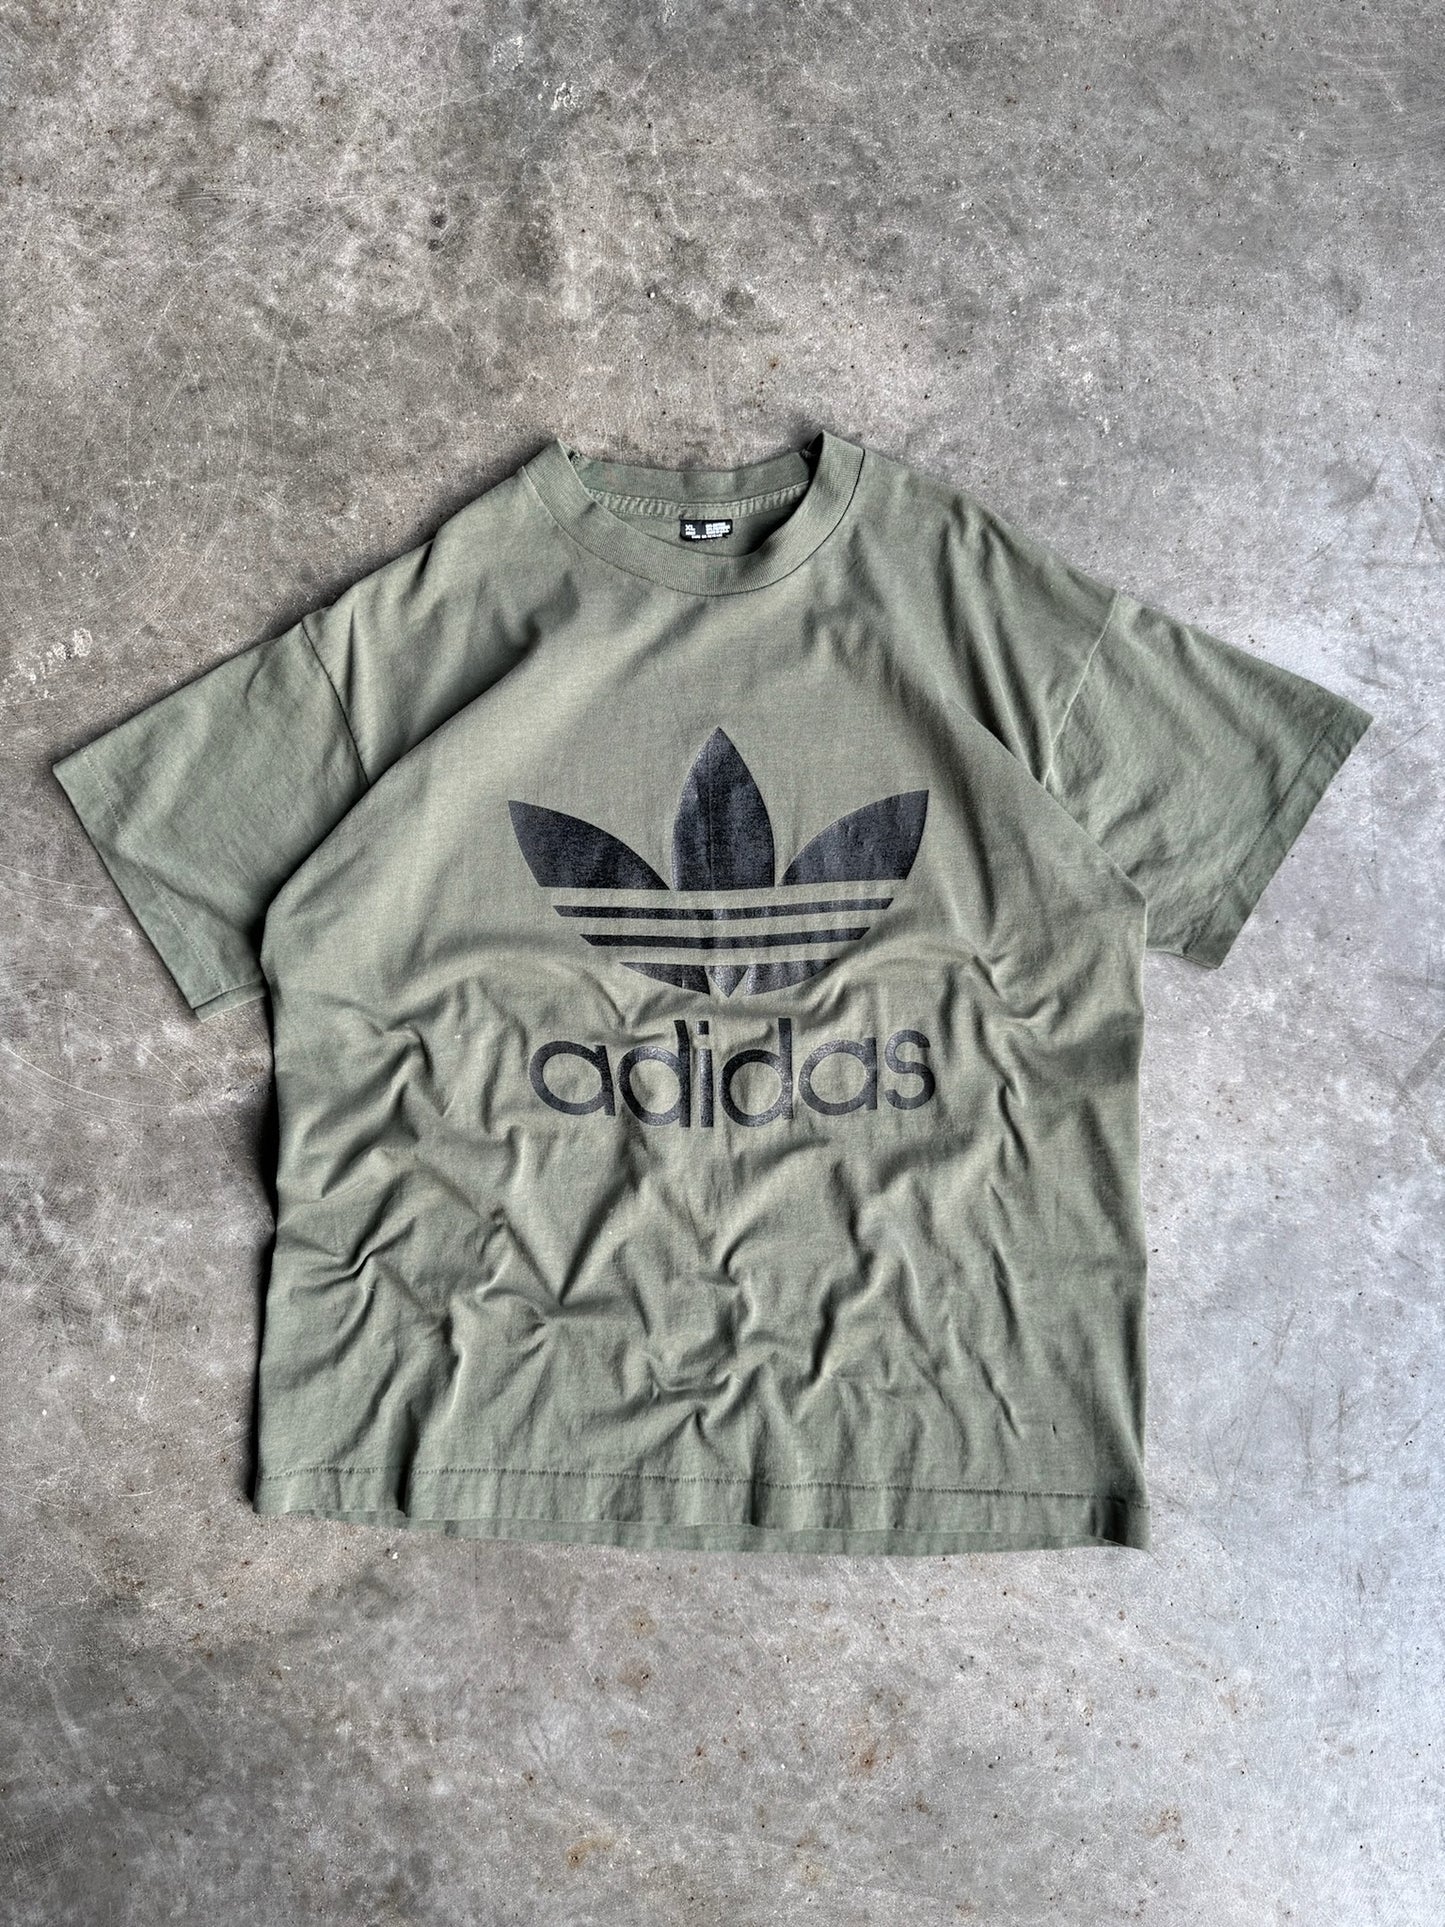 Vintage Adidas Shirt - XL